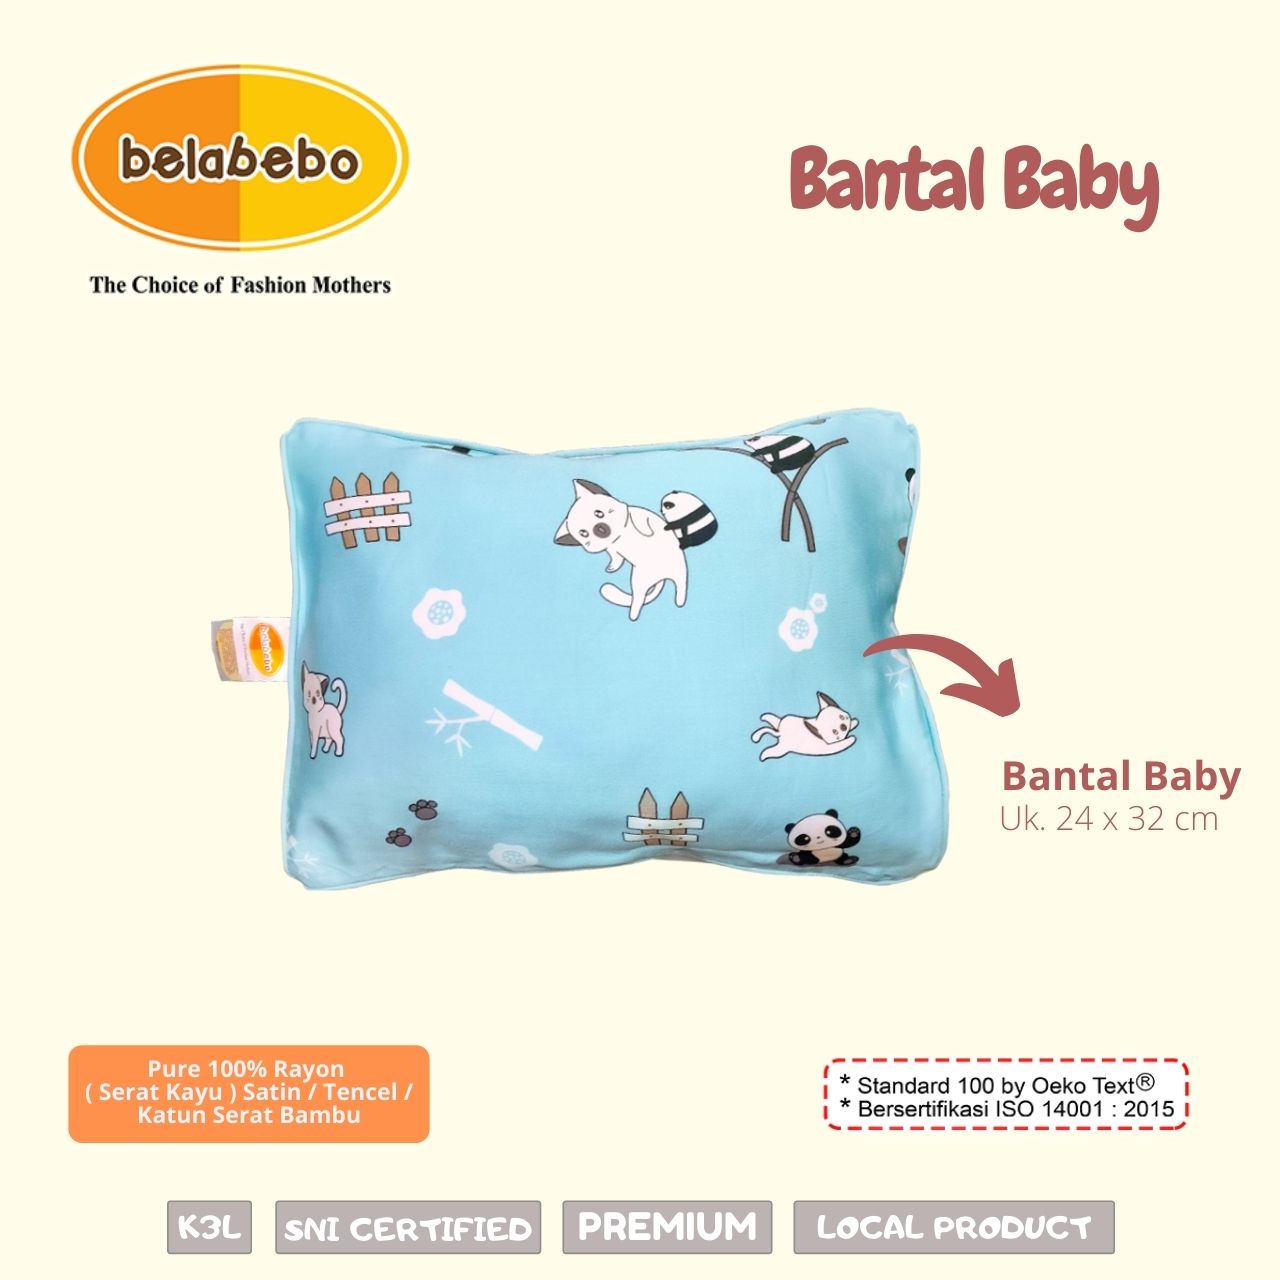 Bantal Baby belabebo